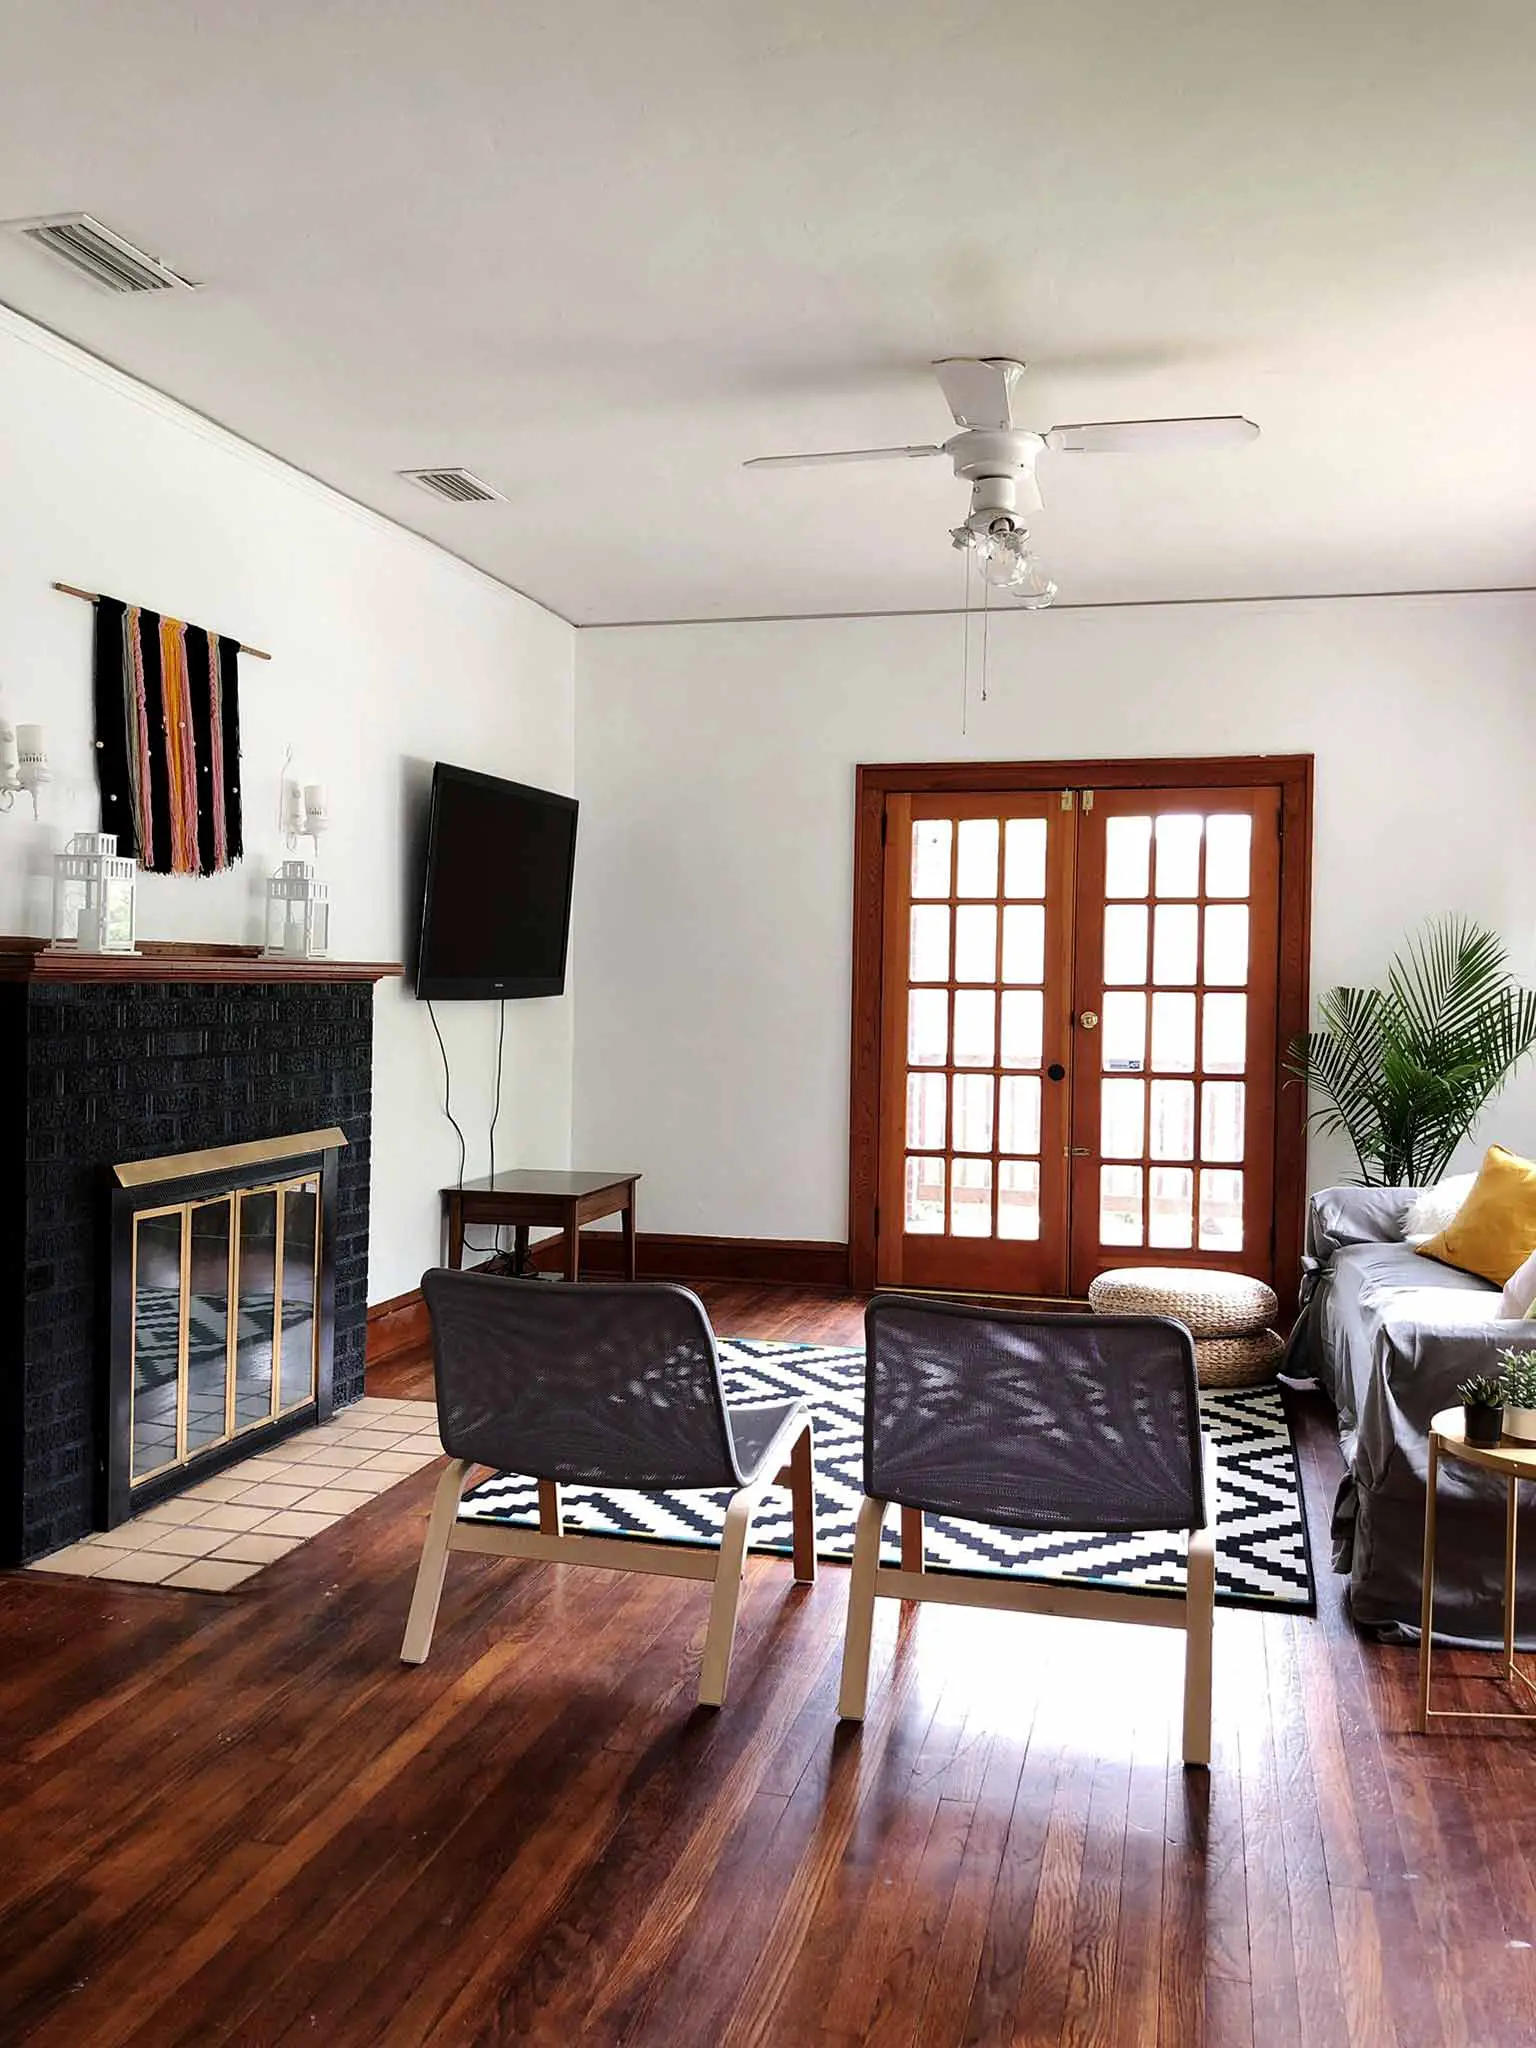 Modern minimalist room makeover on a budget - That Homebird Life Blog